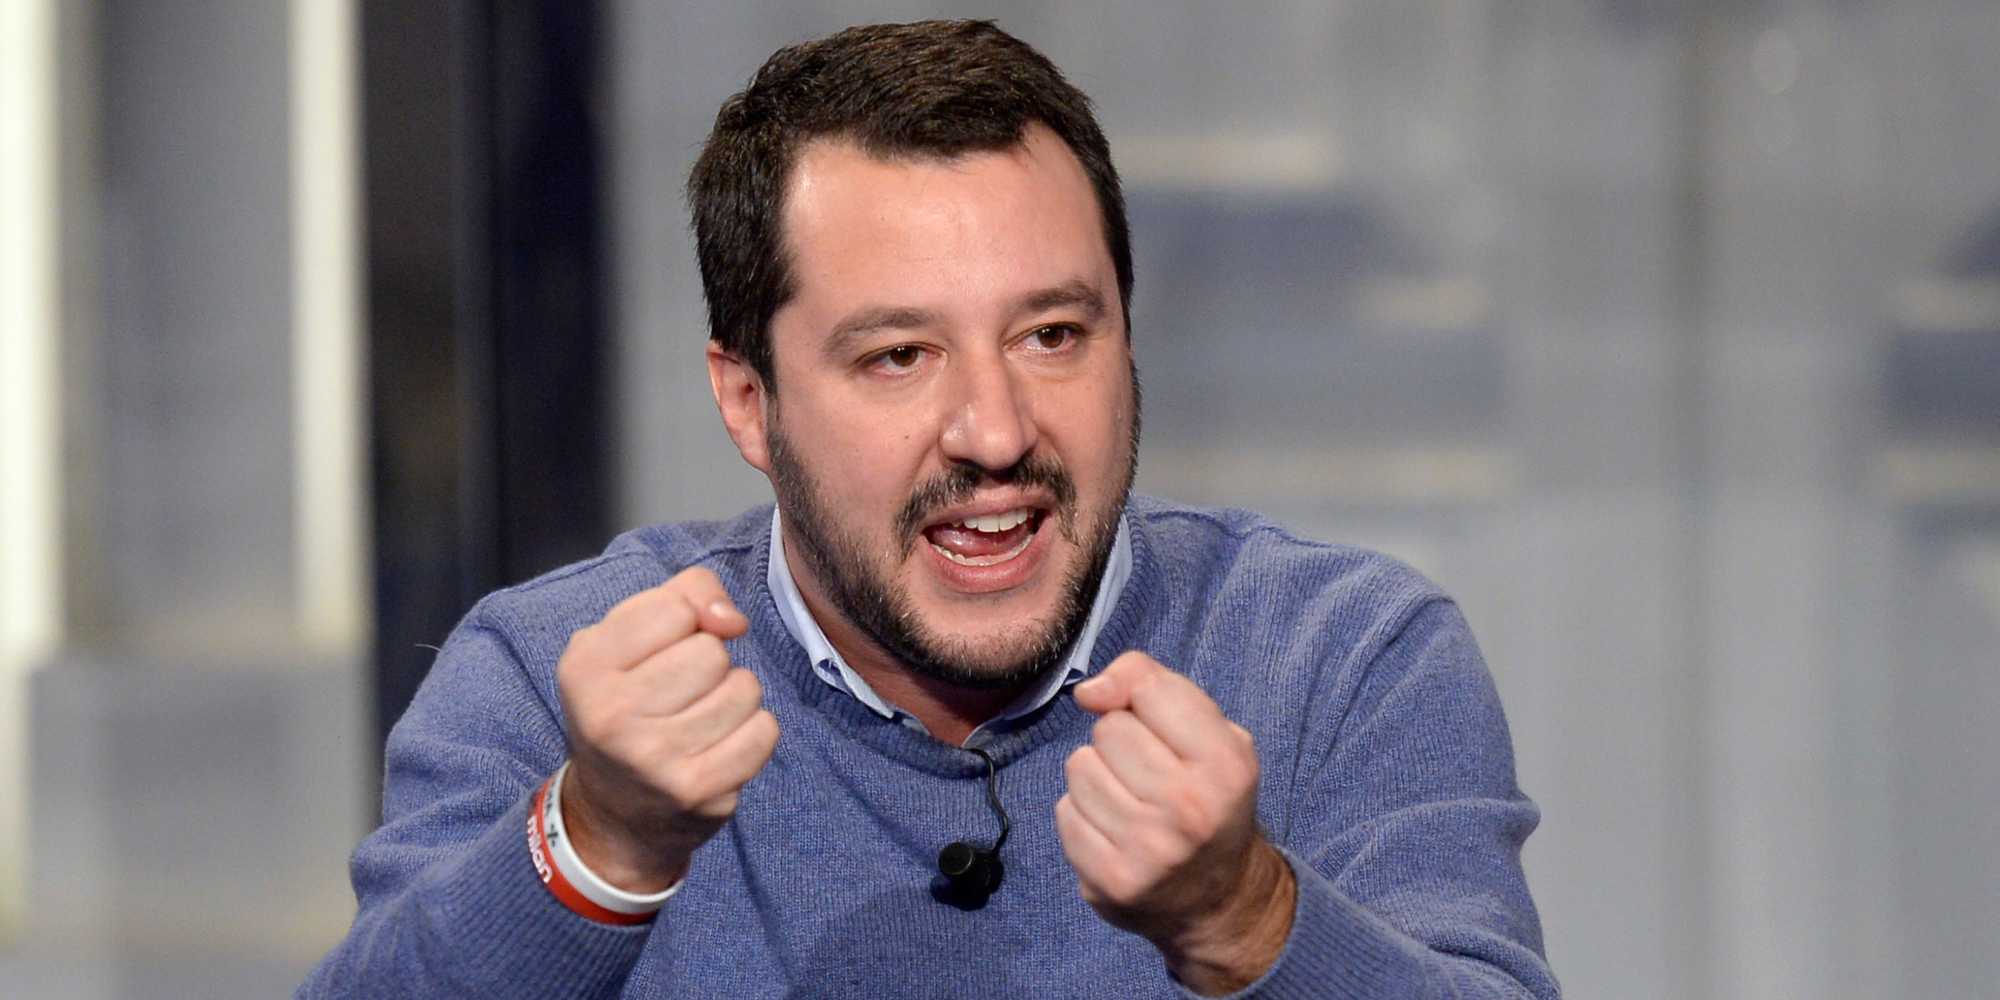 Legittima difesa, Salvini: "Tutti in piazza a Verona il 25 aprile"